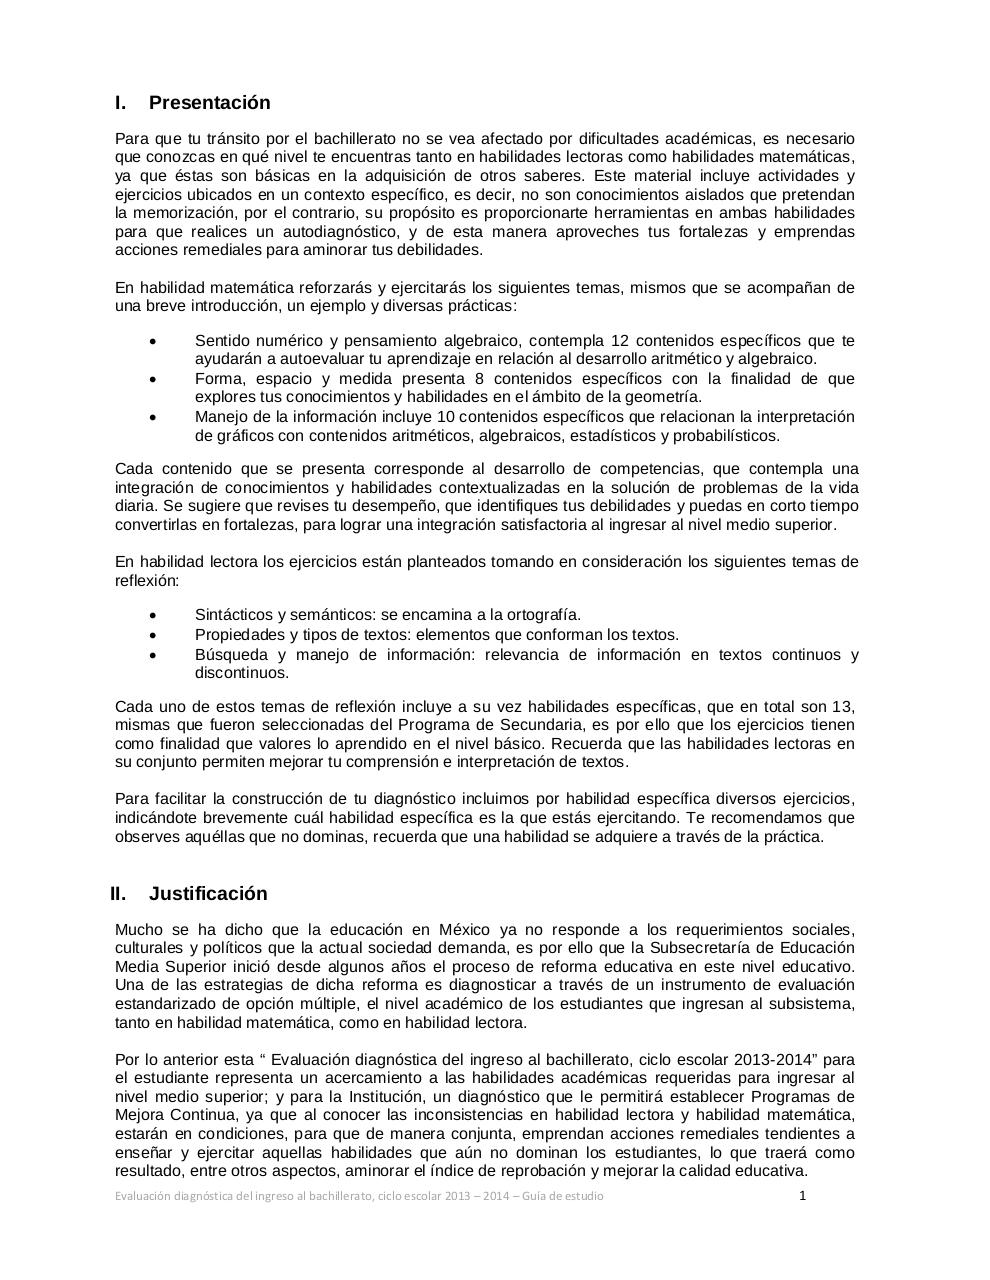 Vista previa del archivo PDF guia-de-estudio2013-2014.pdf